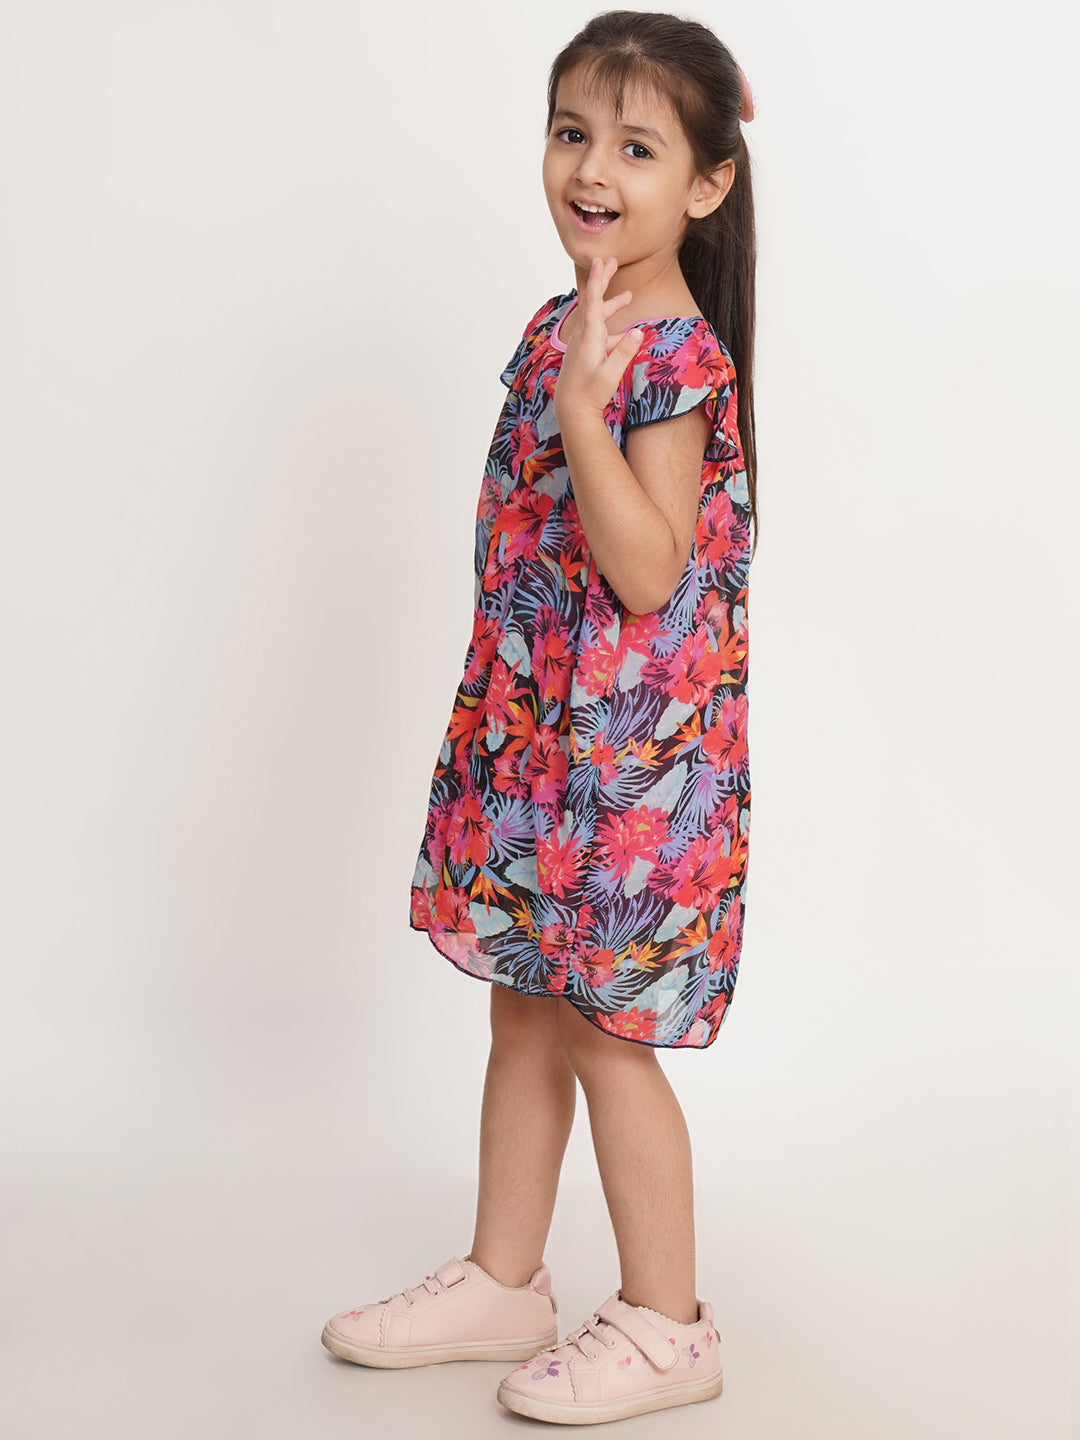 CREATIVE KID'S Girl Pink & Black Floral Print A-Line Dress